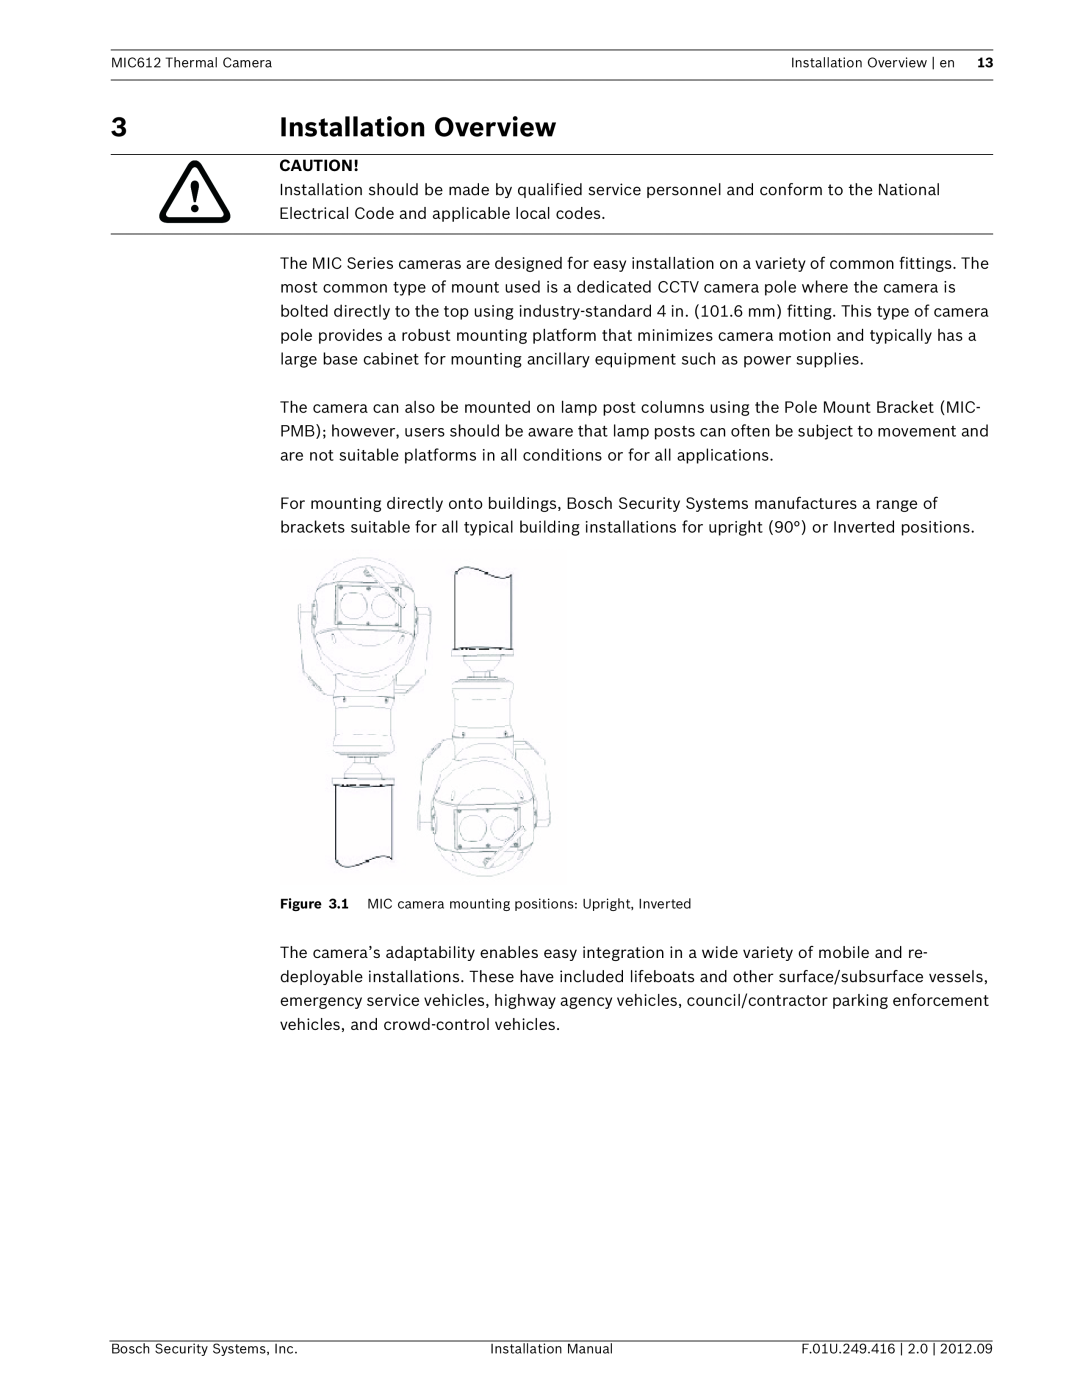 Bosch Appliances MIC612 installation manual Installation Overview 